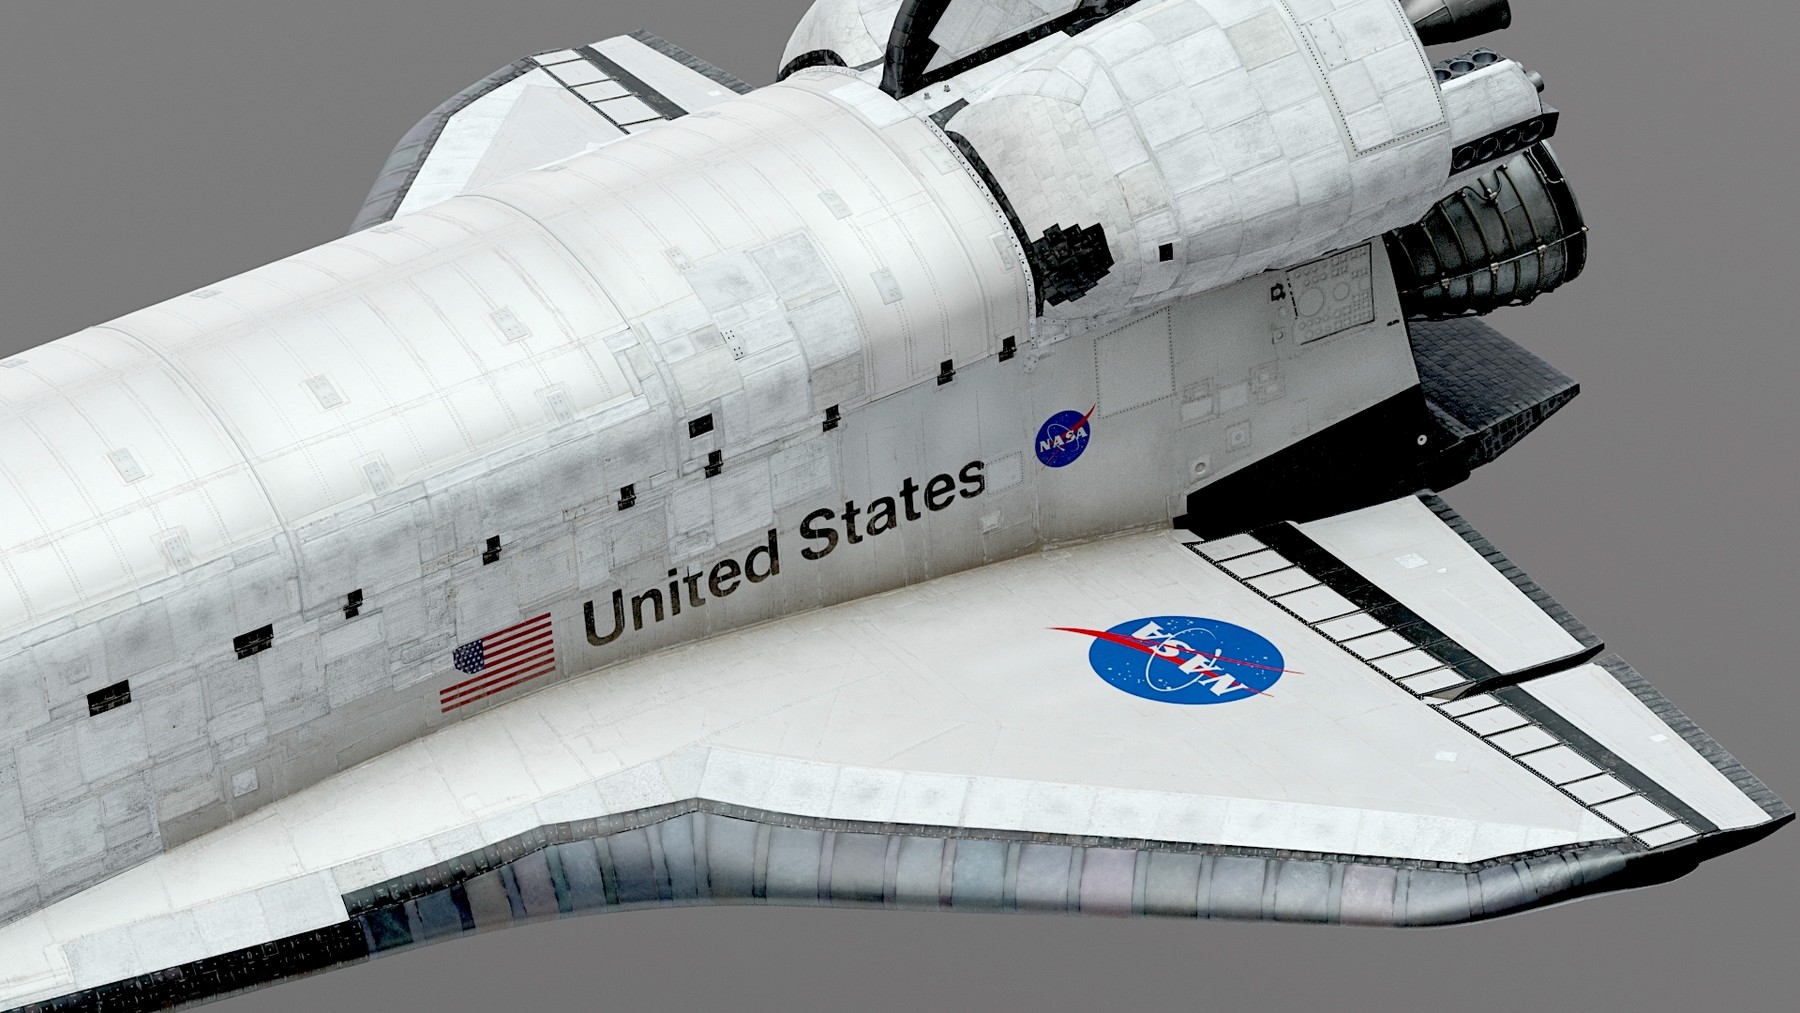 space shuttle endeavour vs atlantis